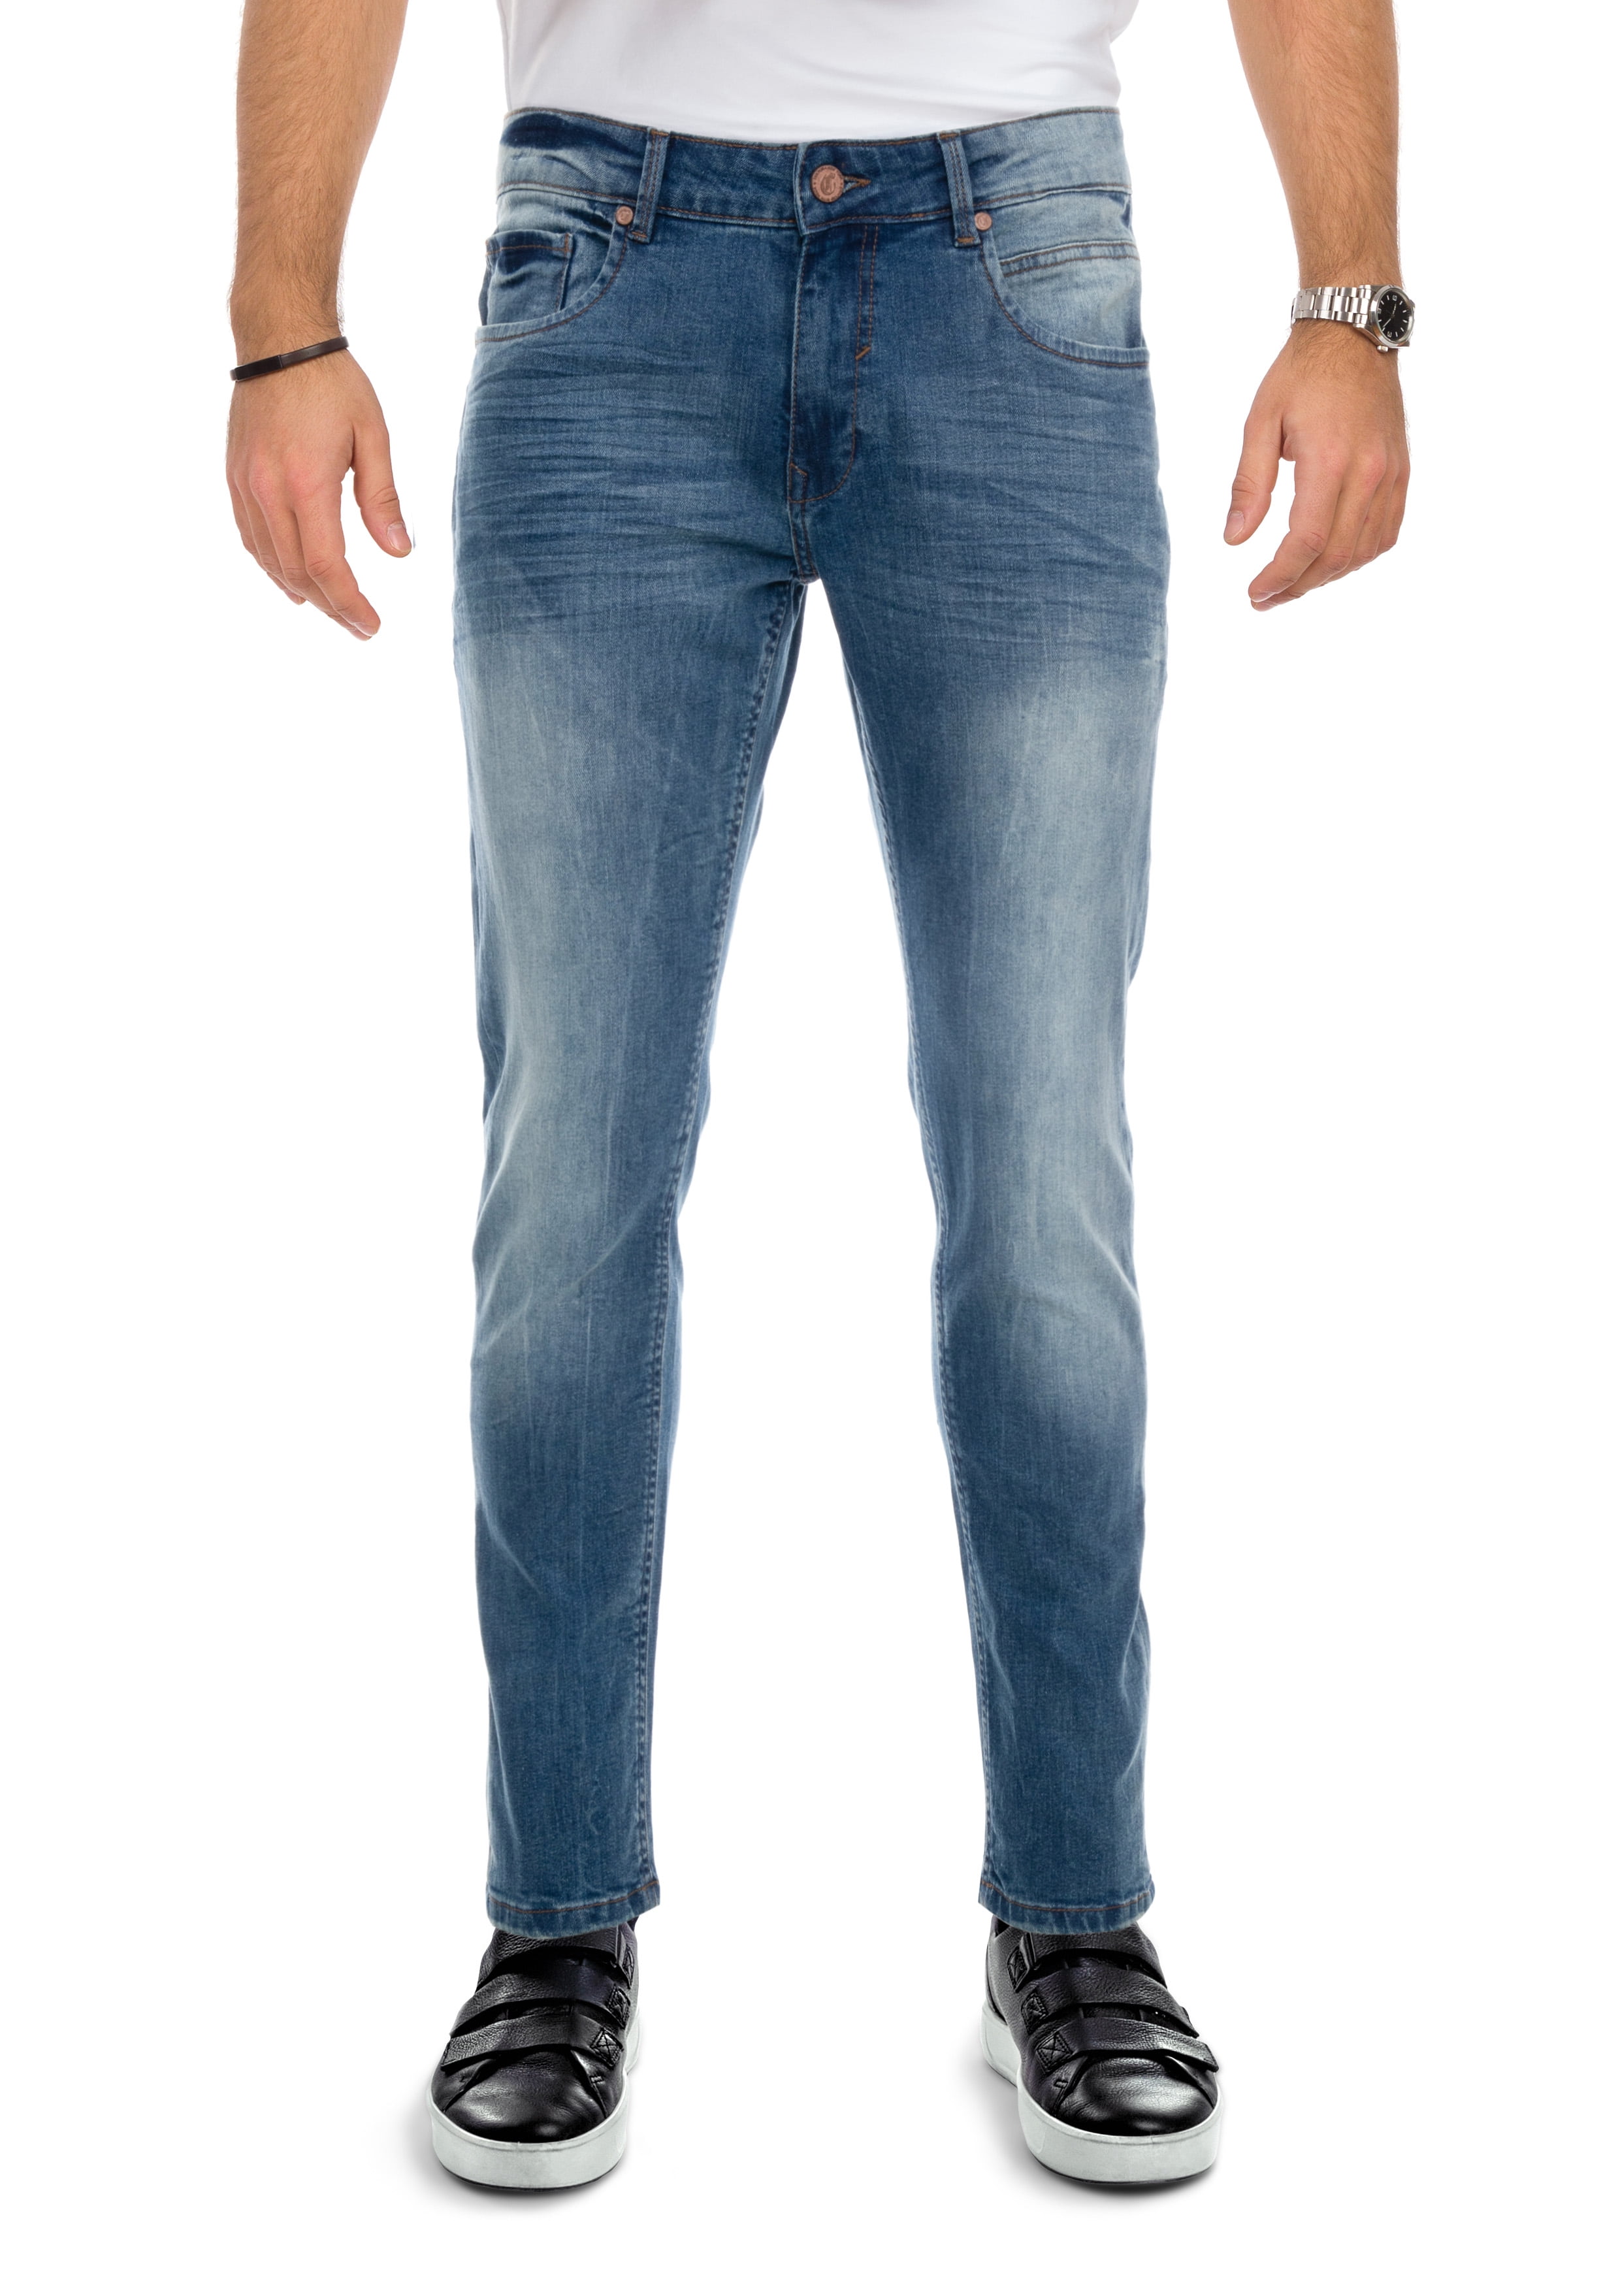 CULTURA Men's Jeans Stretch Washed Distressed Fashion Denim Flex ...